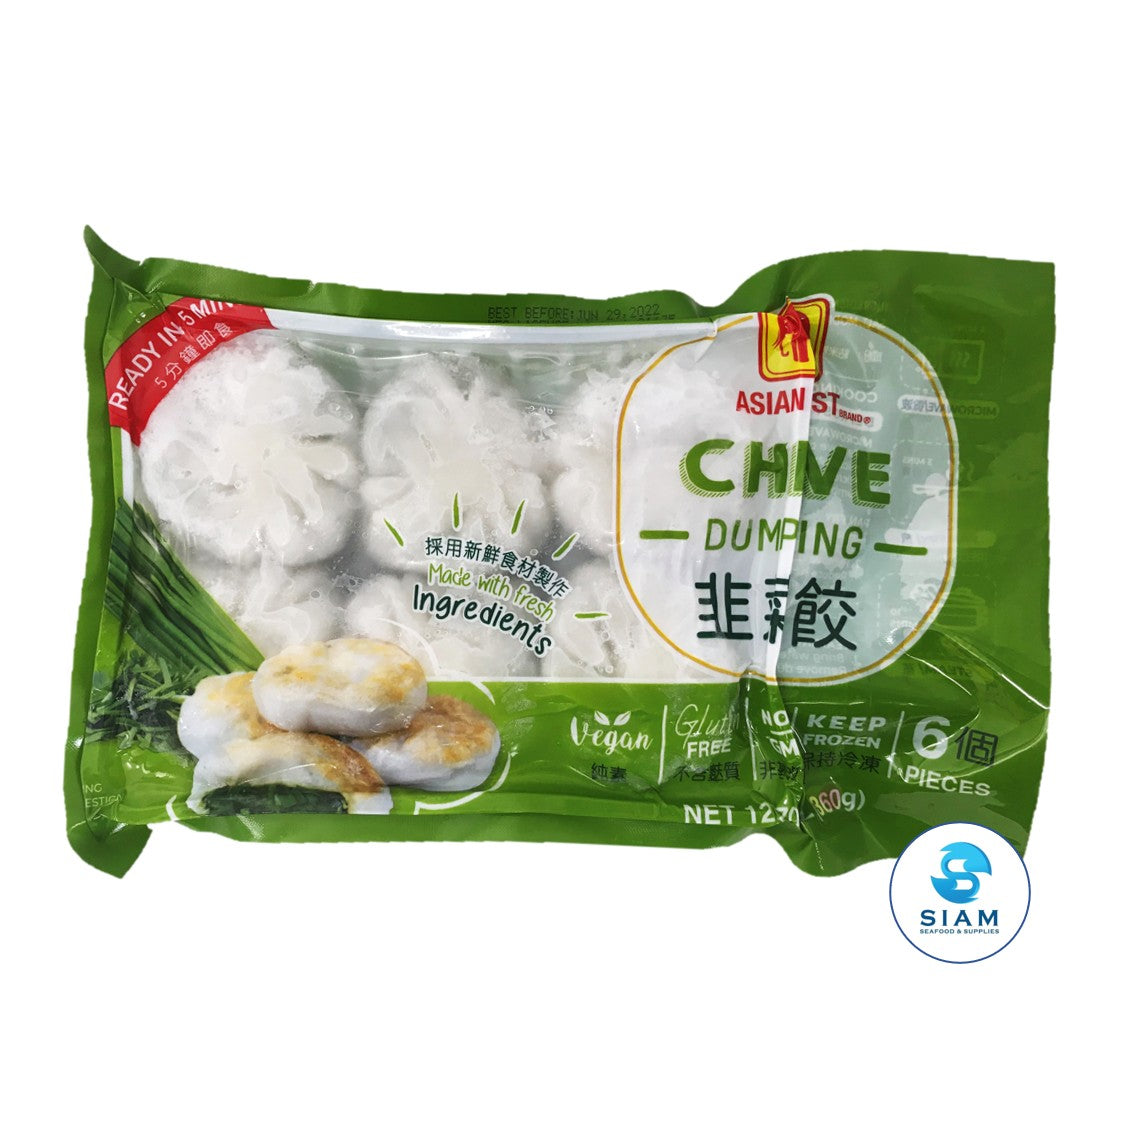 Chive Dumpling, Ku Chai, Frozen - Asian Best (6 pcs, 12.7 oz) Asian Best